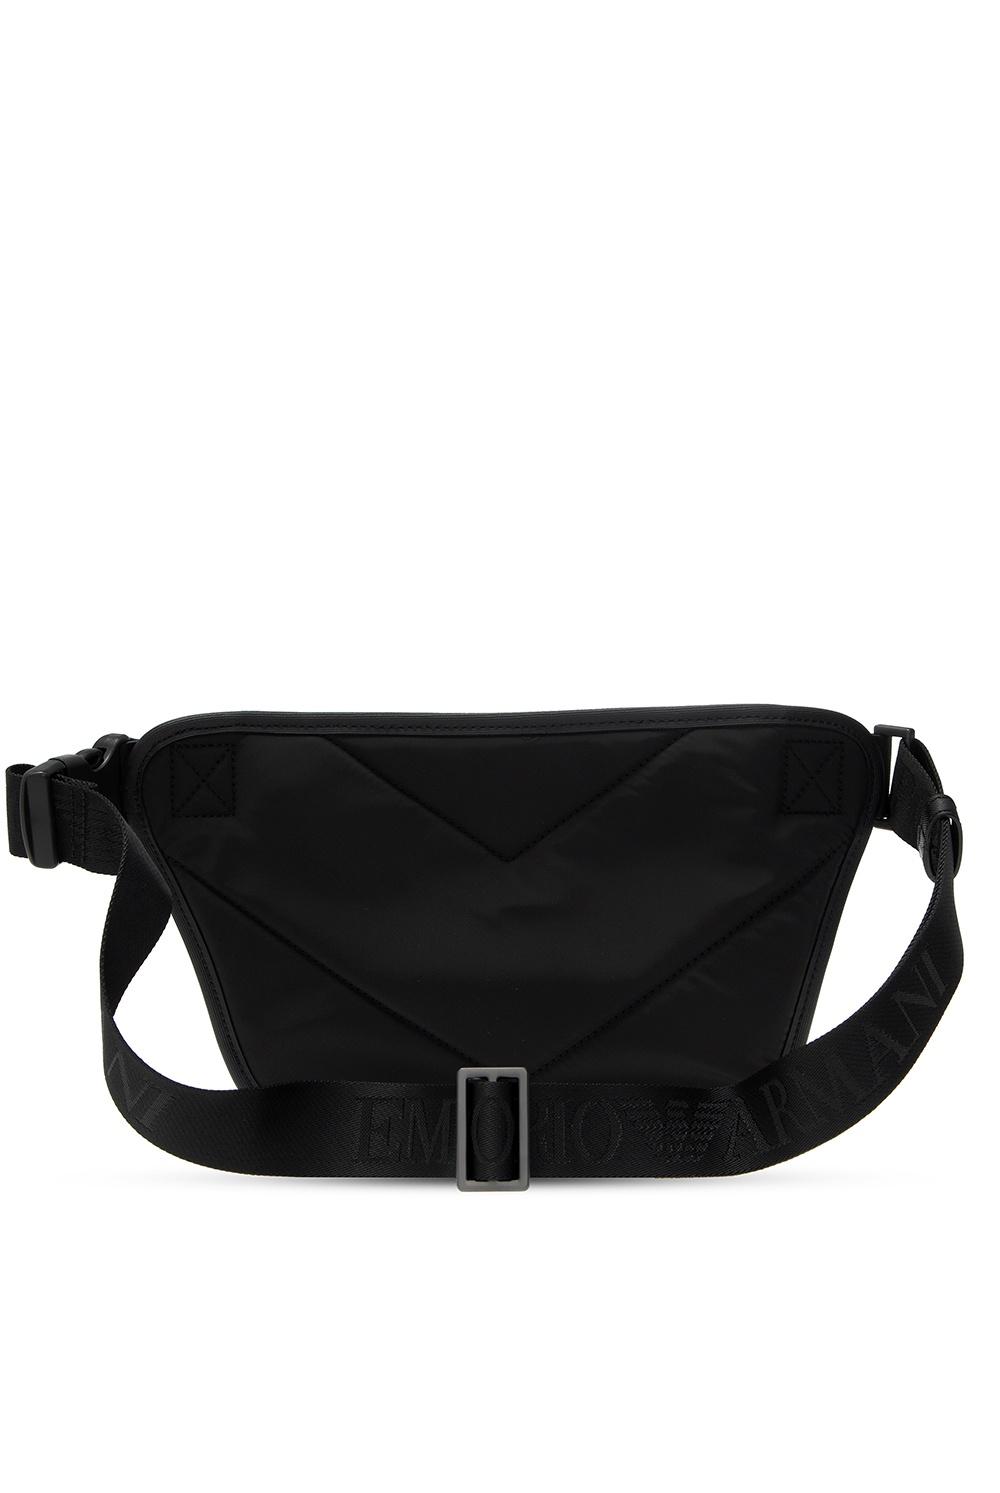 Emporio Armani Belt Bag With Logo Black for Men - Lyst